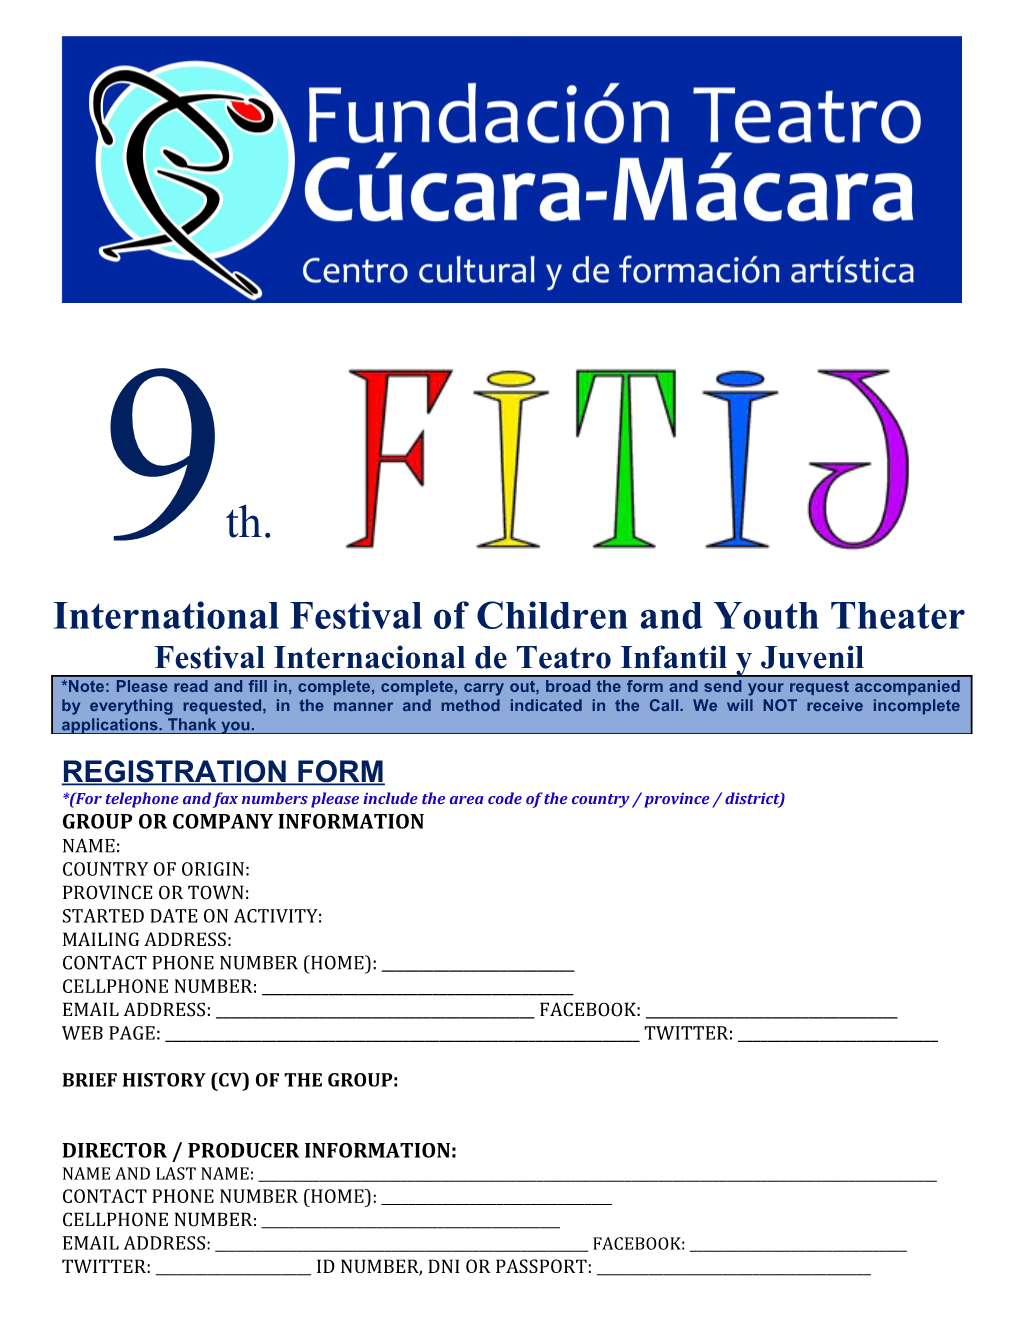 International Festival of Children and Youth Theaterfestival Internacional De Teatro Infantil